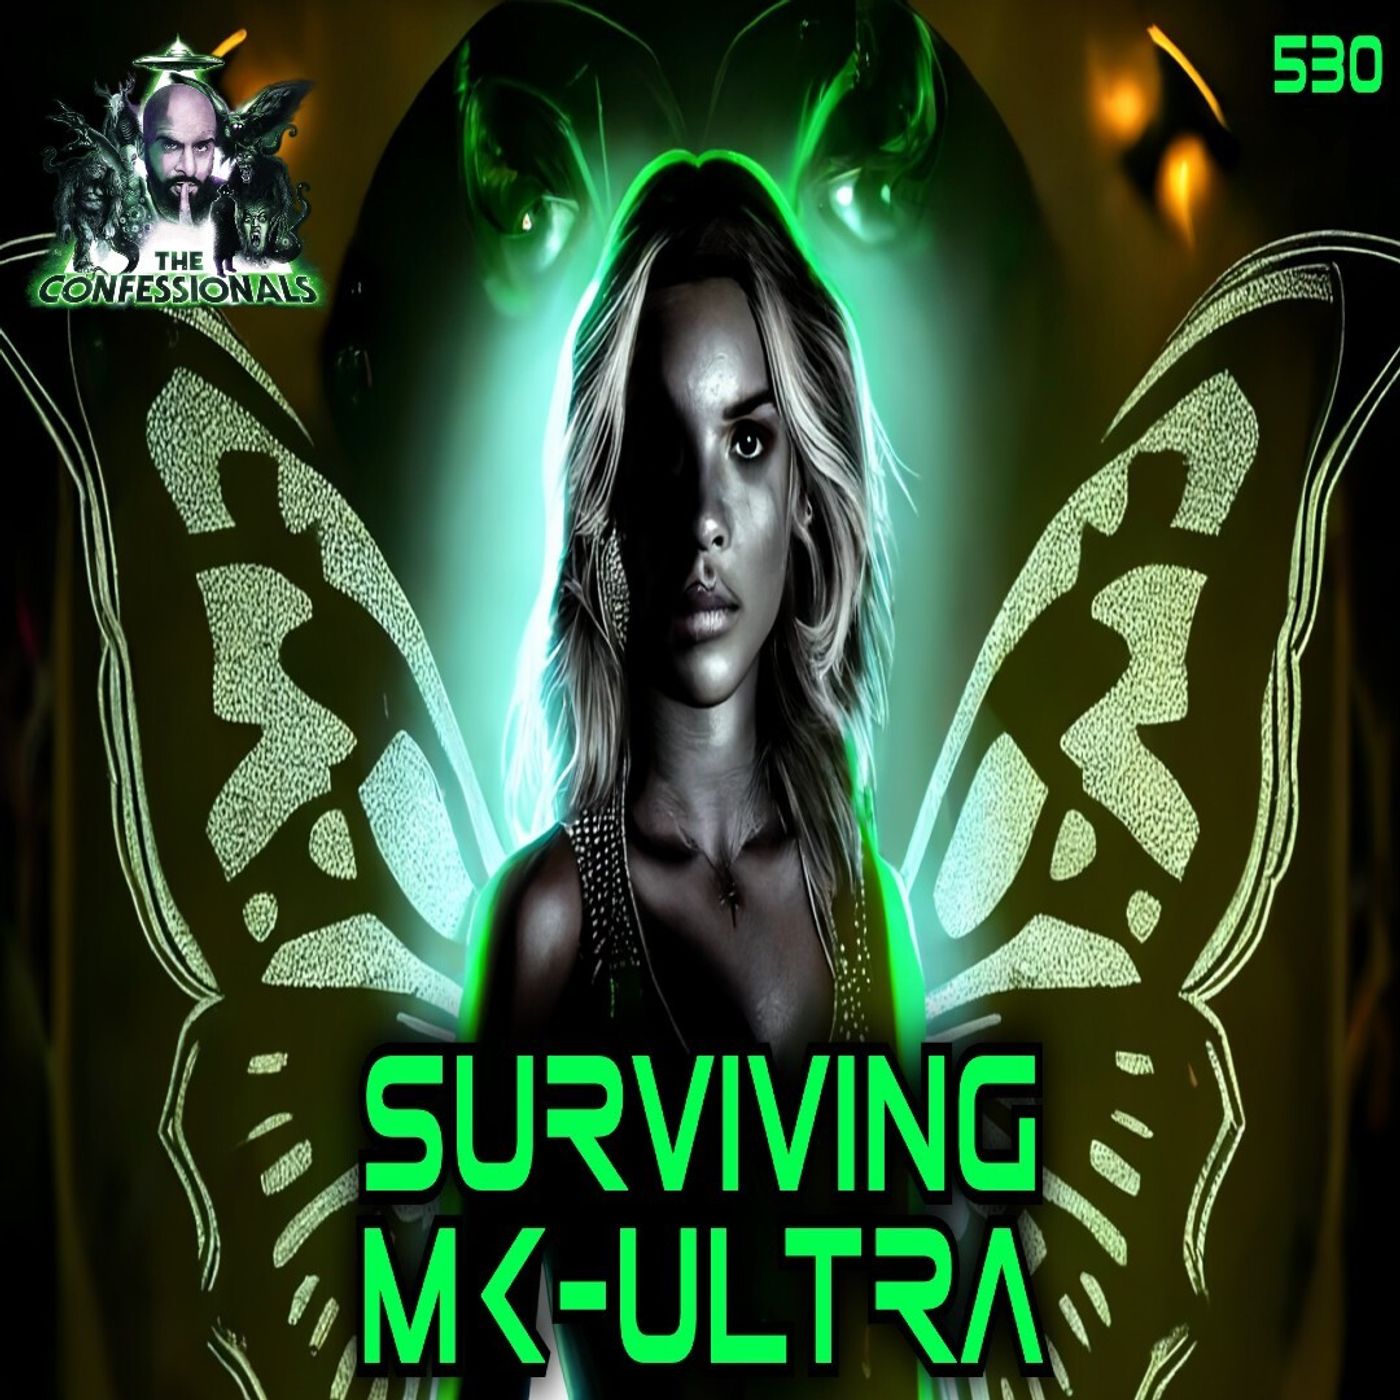 530: Surviving MK-ULTRA